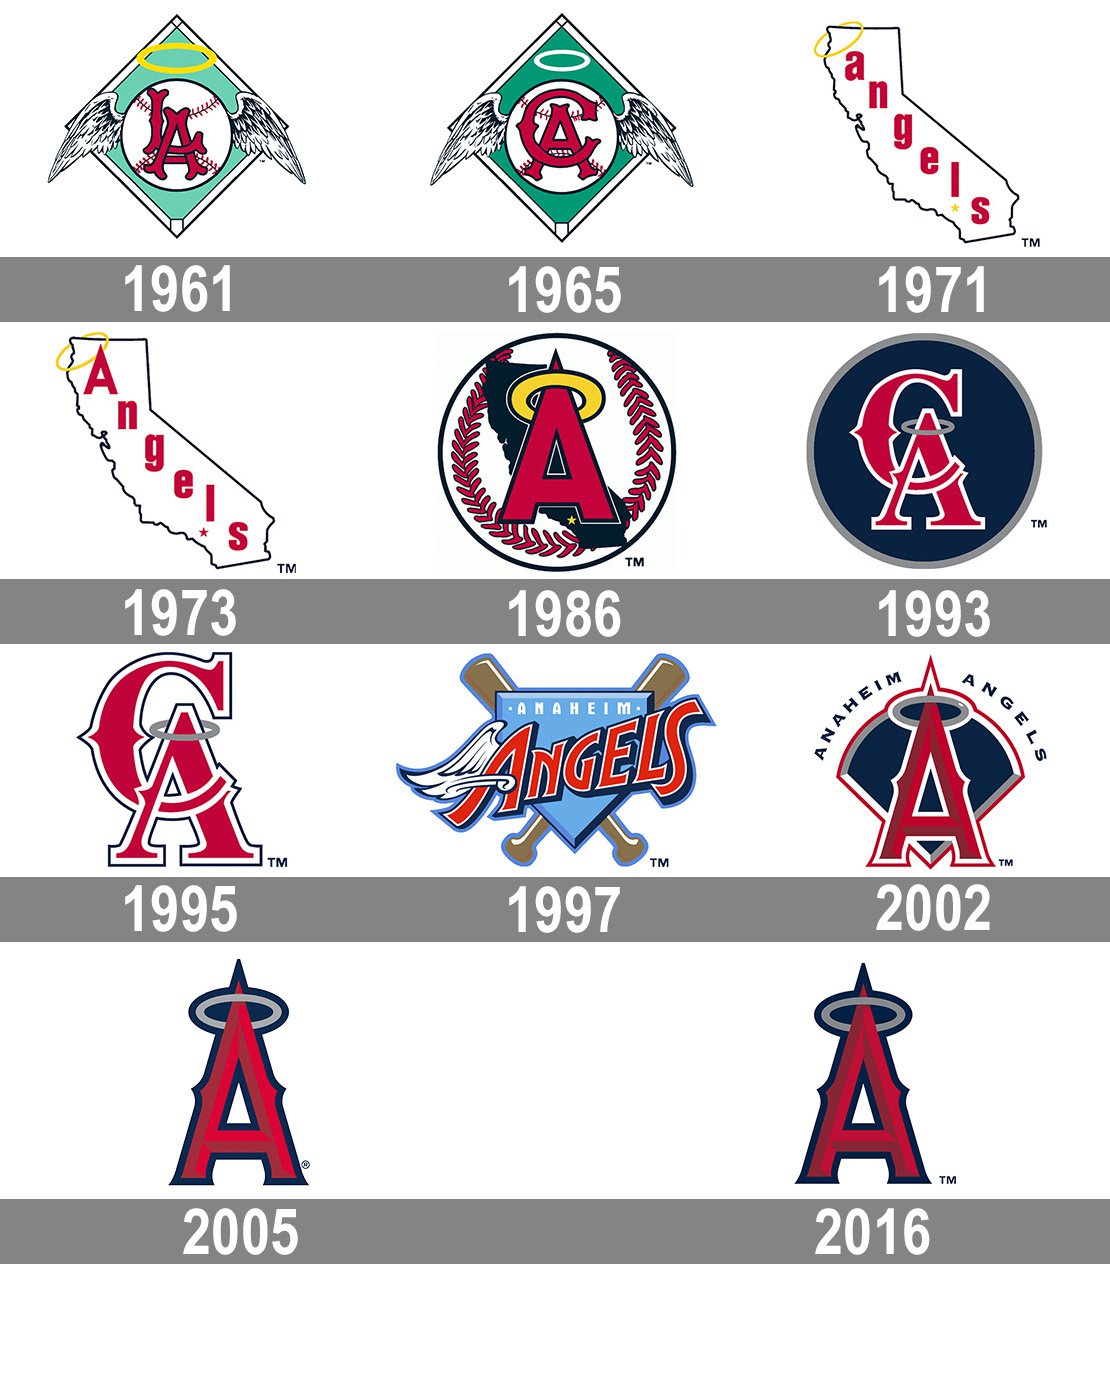 California Angels 1993-96  Anaheim angels, Angels logo, Angels baseball